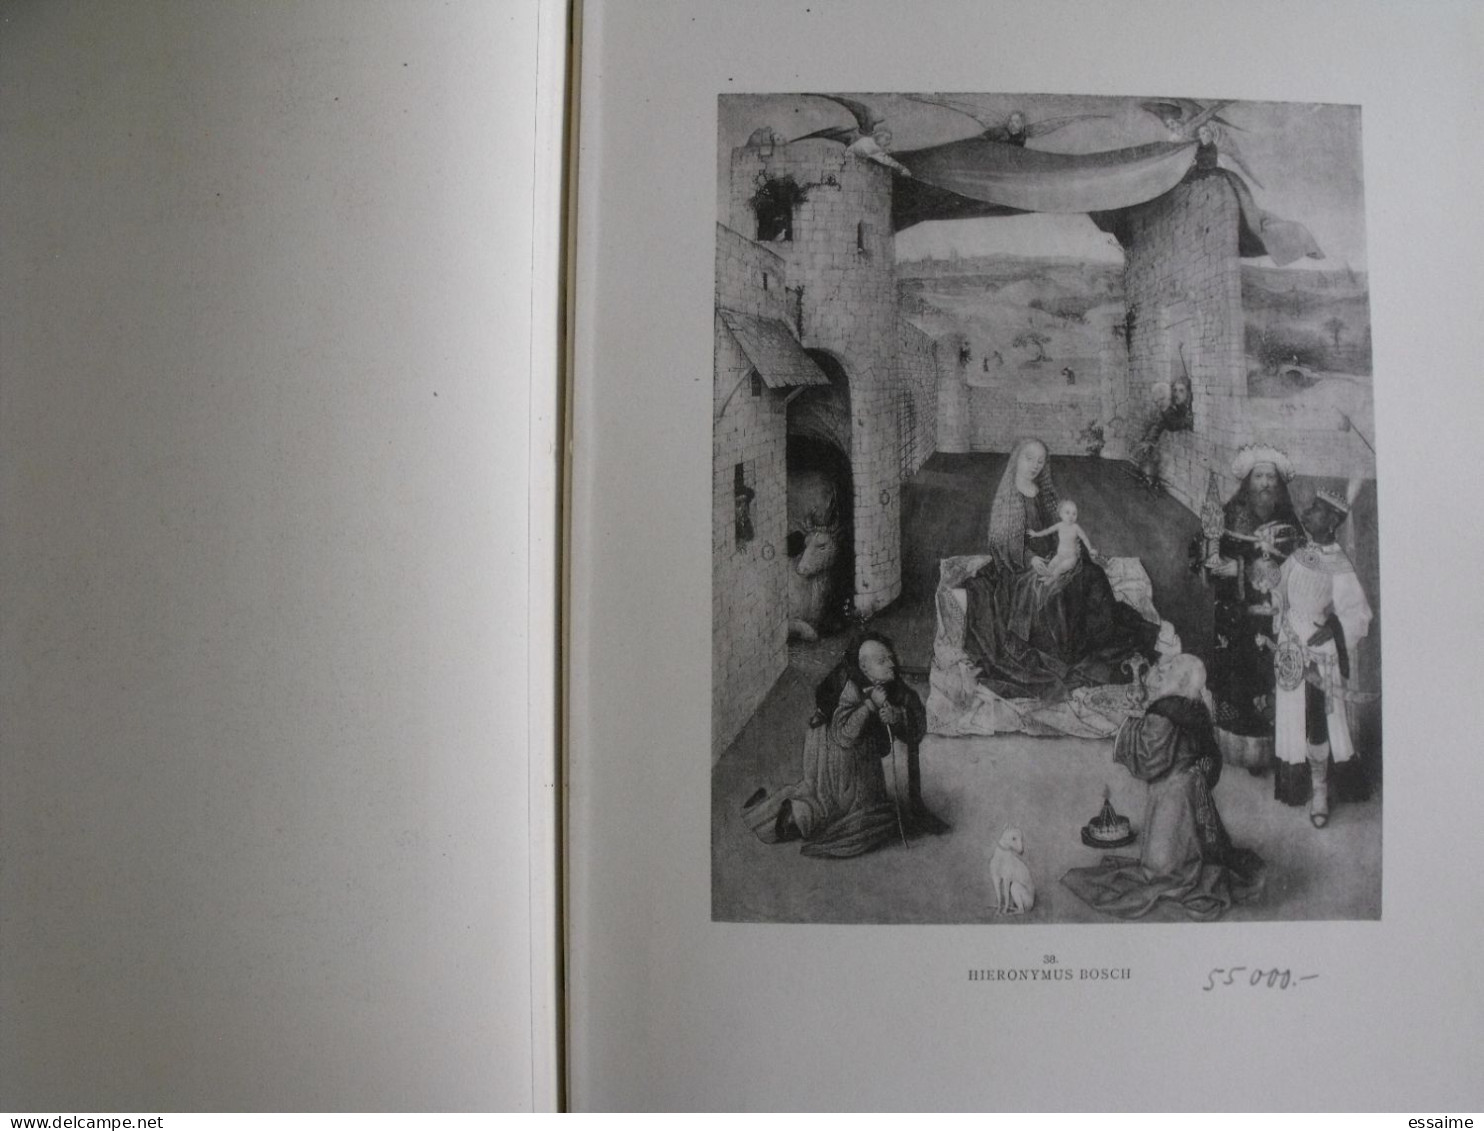 catalogue de vente friedrich lippmann. 1912 à berlin. brueghel giotto oudry cranach bosch bellegambe kulmbach jacopo